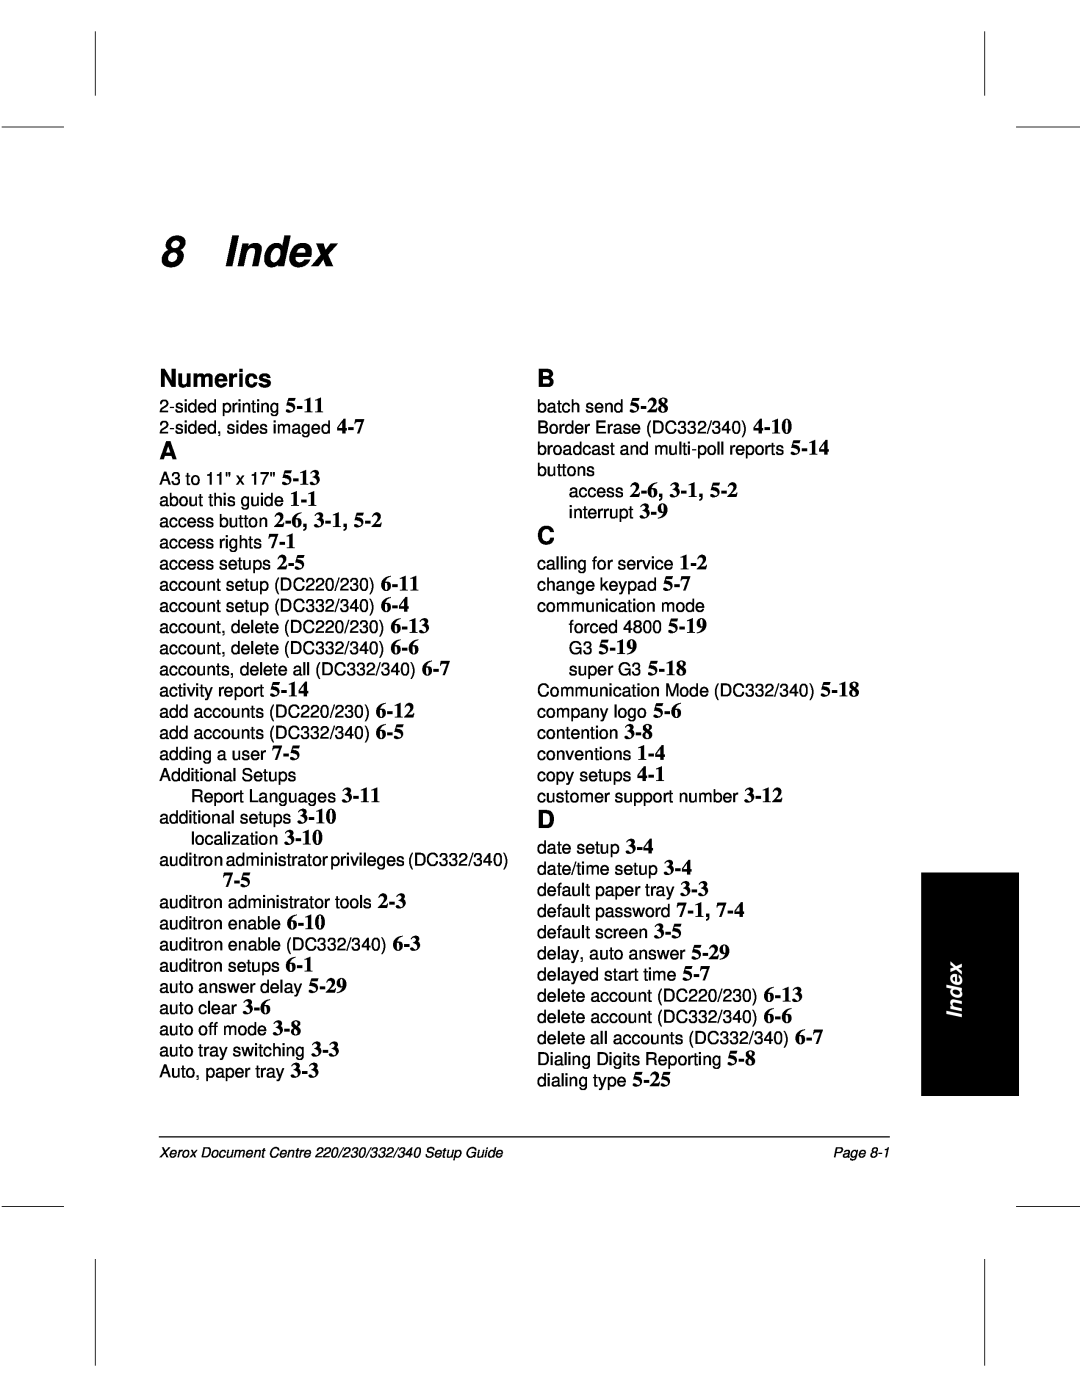 Xerox 332, 340, 220, 230 setup guide Index, Numerics, access 2-6, 3-1 